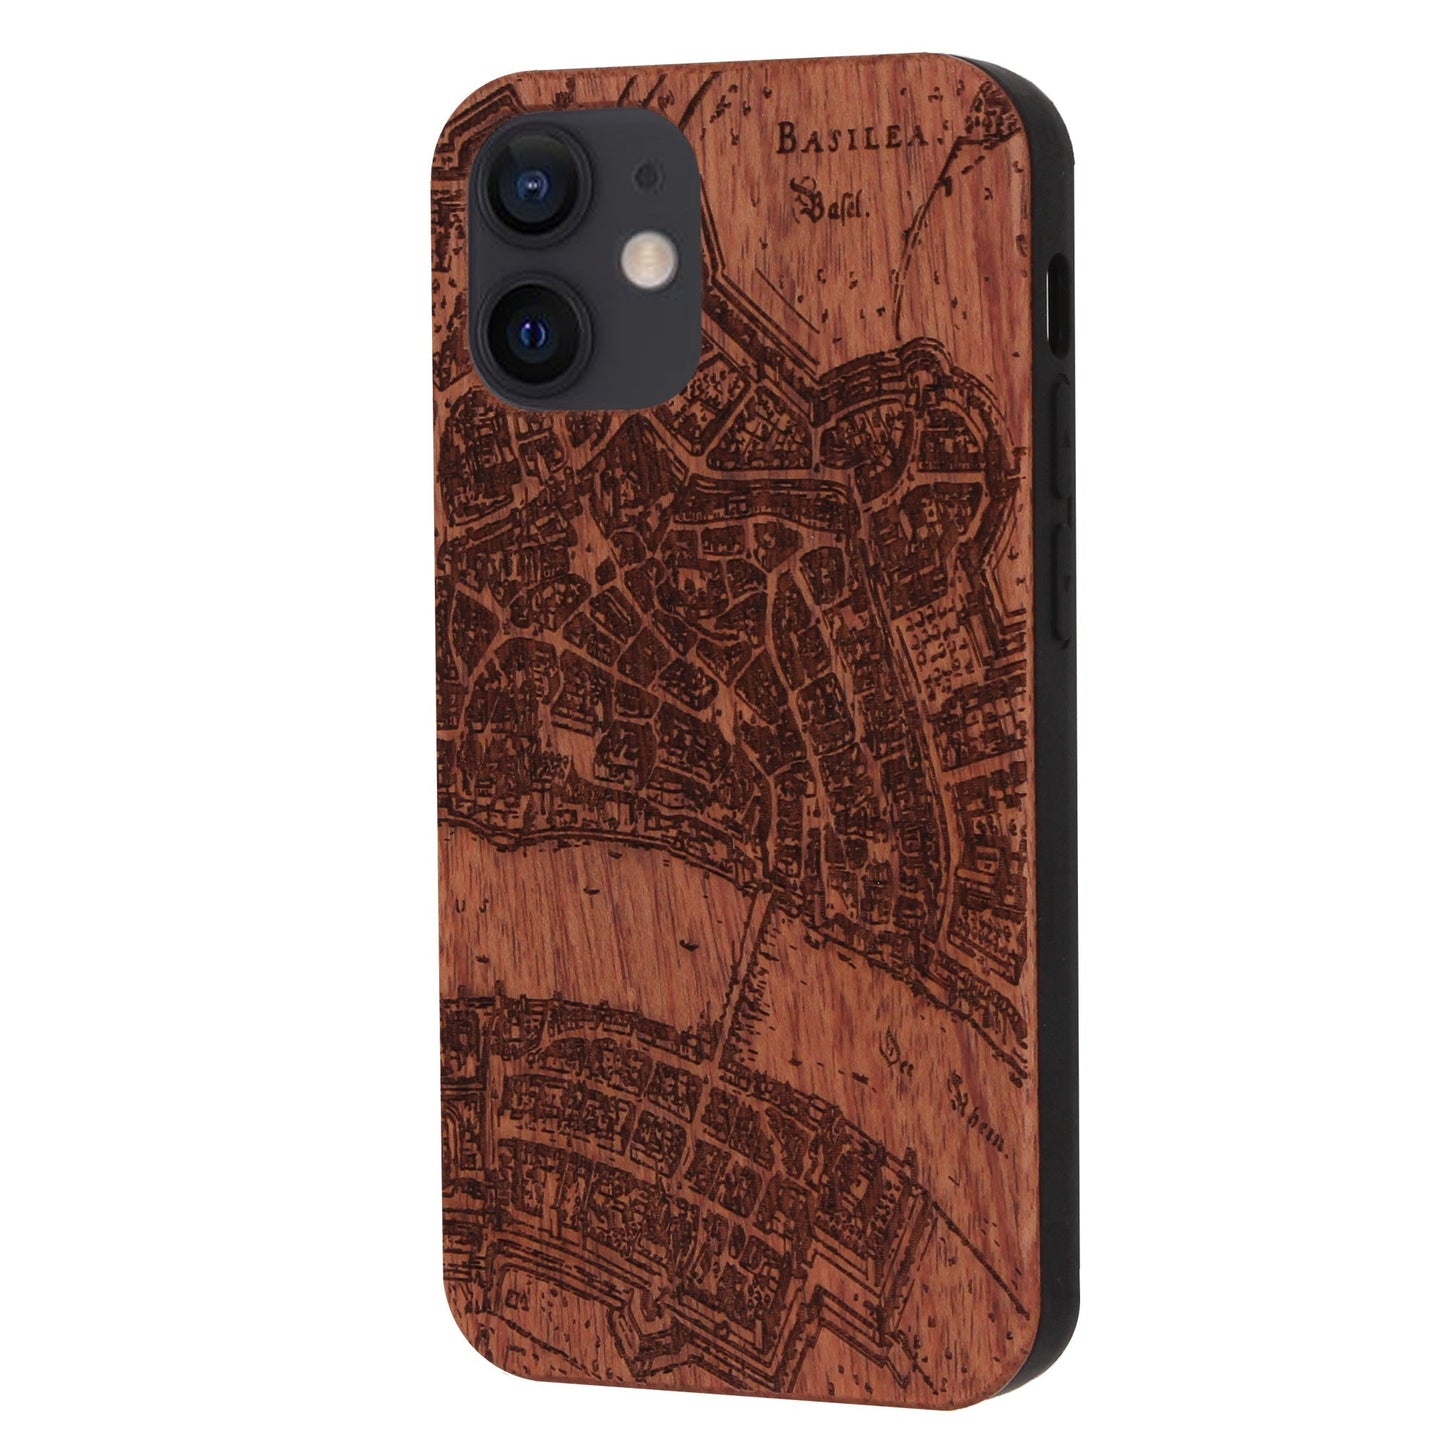 Basel Merian Eden rosewood case for iPhone 12 Mini